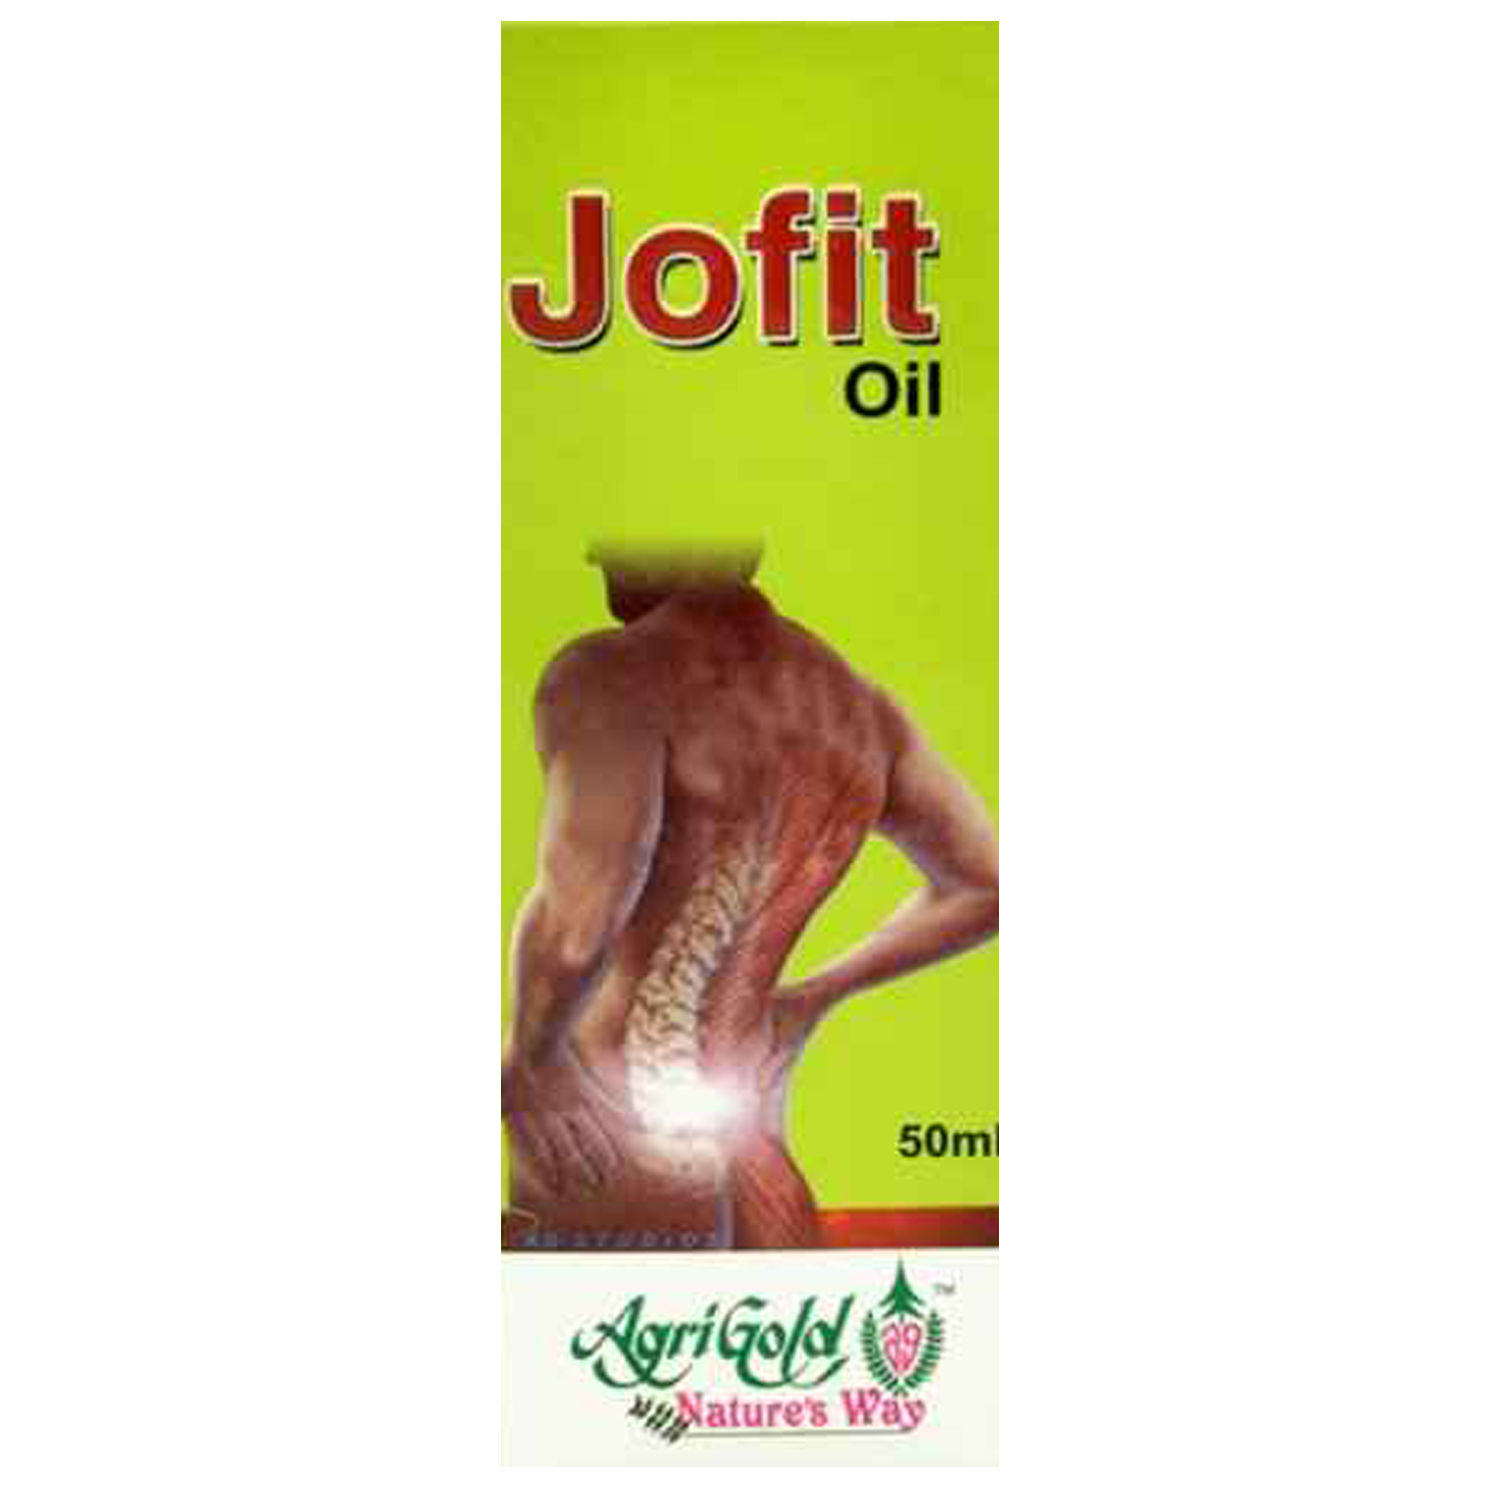 Buy Jofit Oil, 50 ml Online